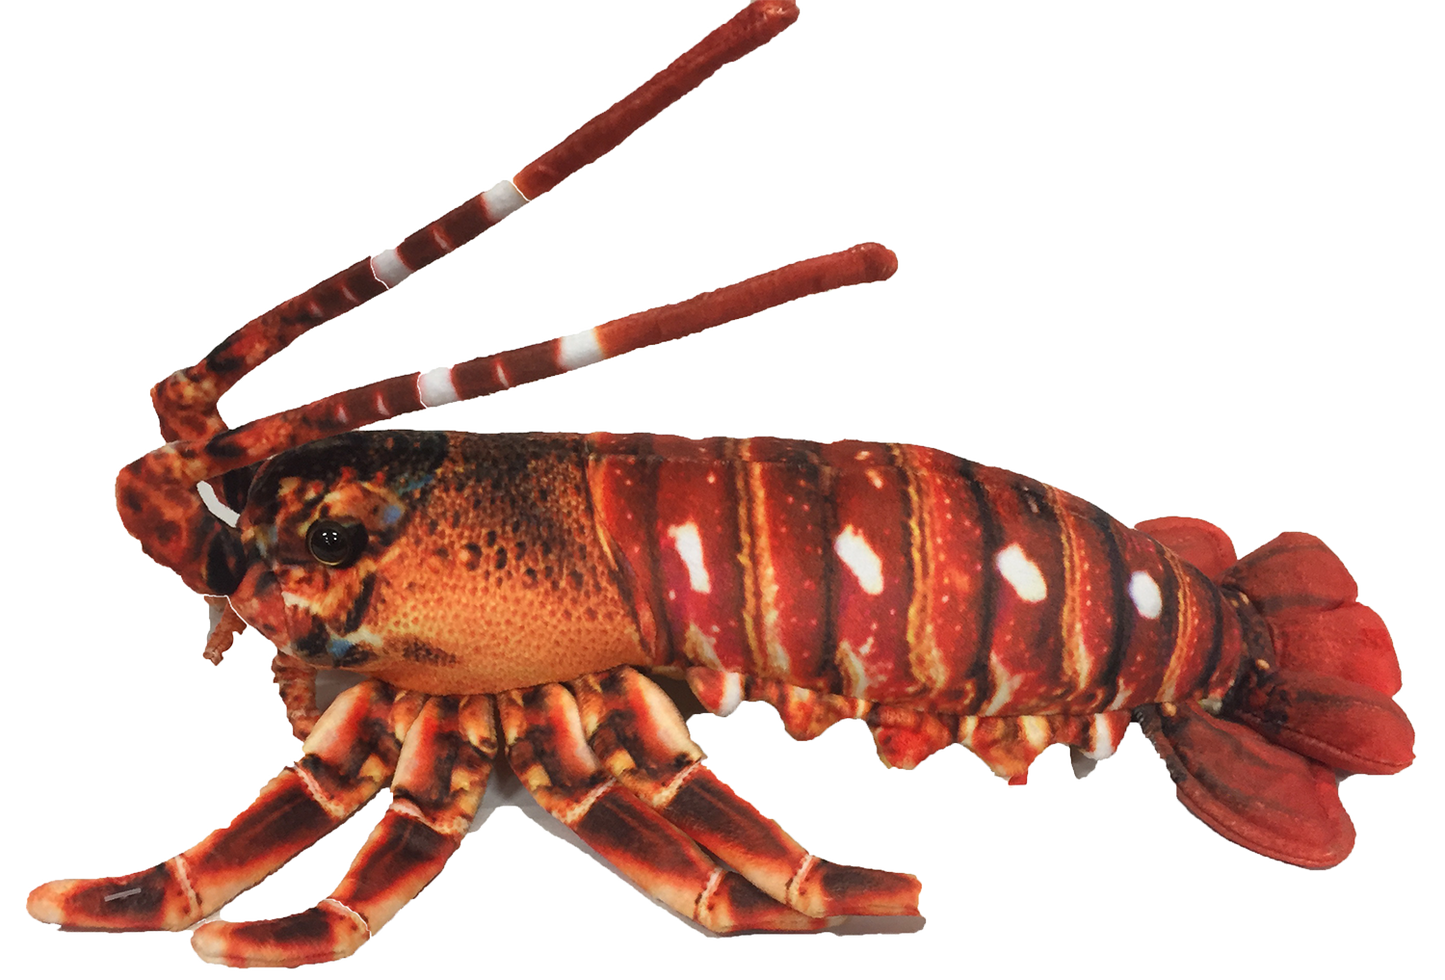 Crawfish Lobster 12.5" Plush Aquatic Stuffed Animal